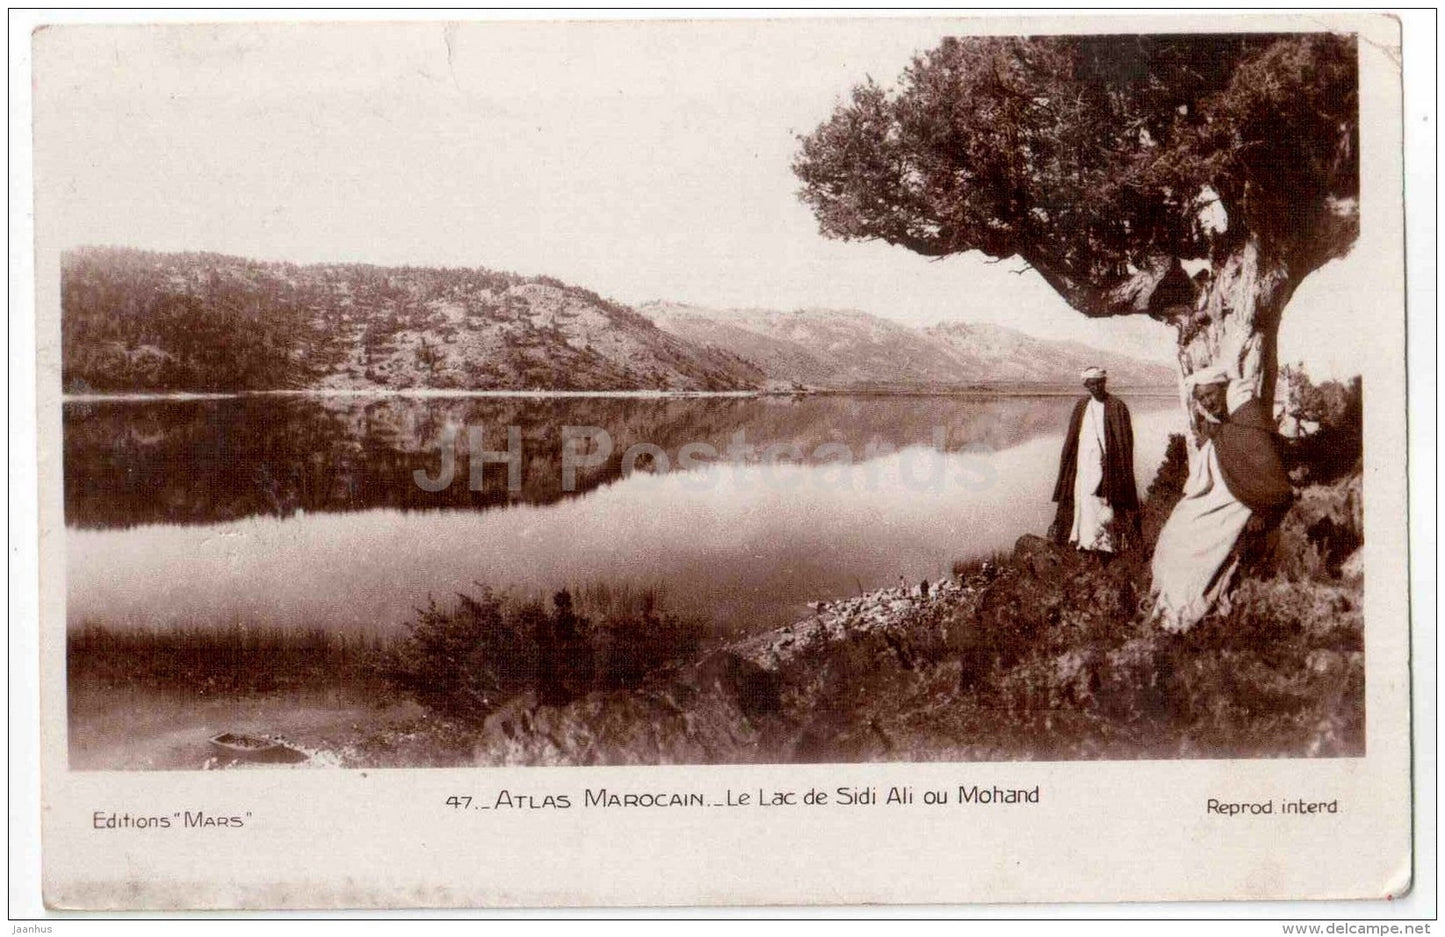 Atlas Marocain - Le Lac de Sidi Ali ou Mohad - lake - Morocco - old postcard - sent from Morocco Agadir to Estonia 1934 - JH Postcards